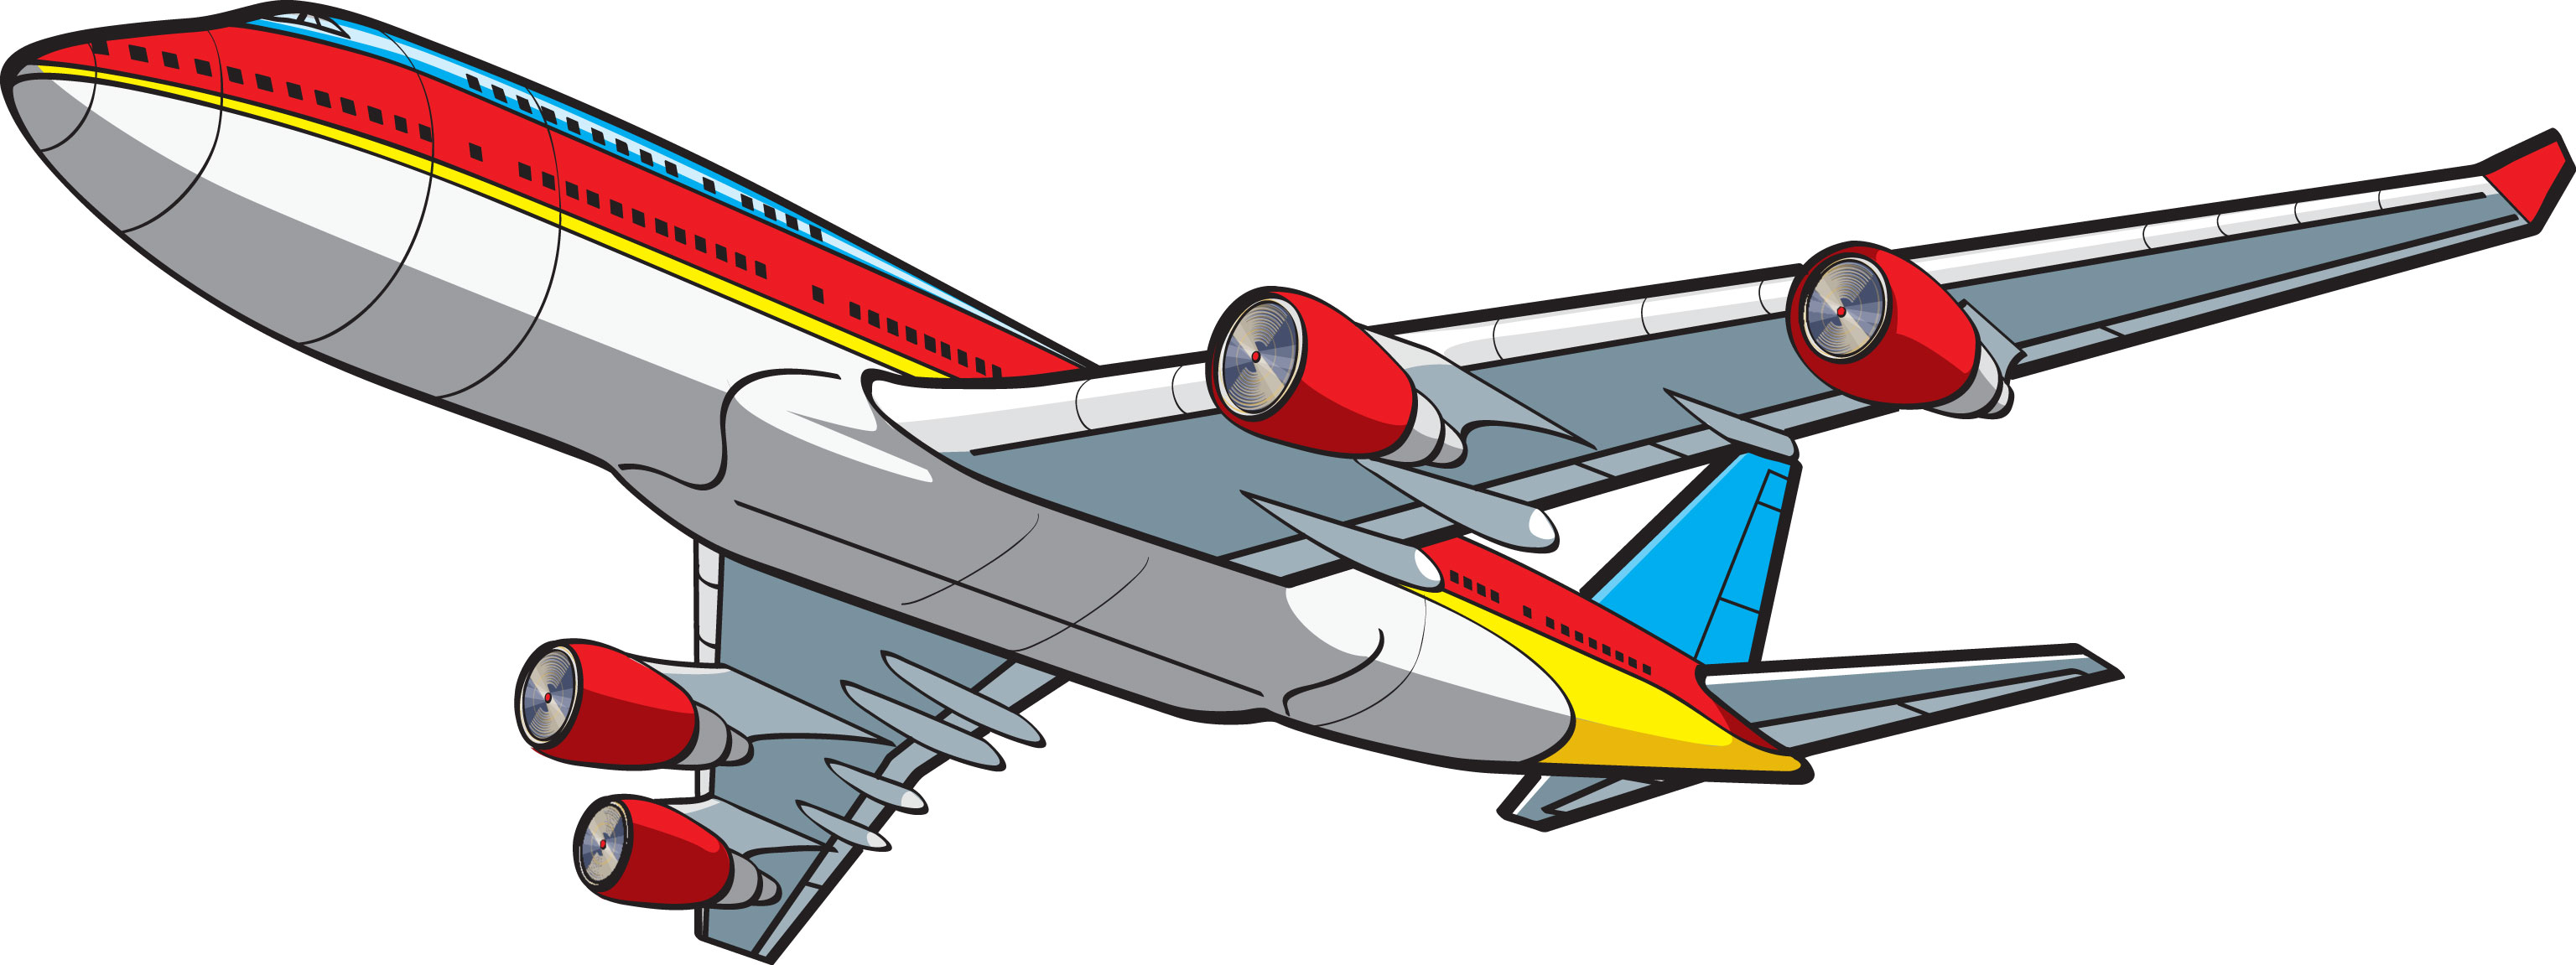 airplane graphics clip art - photo #32